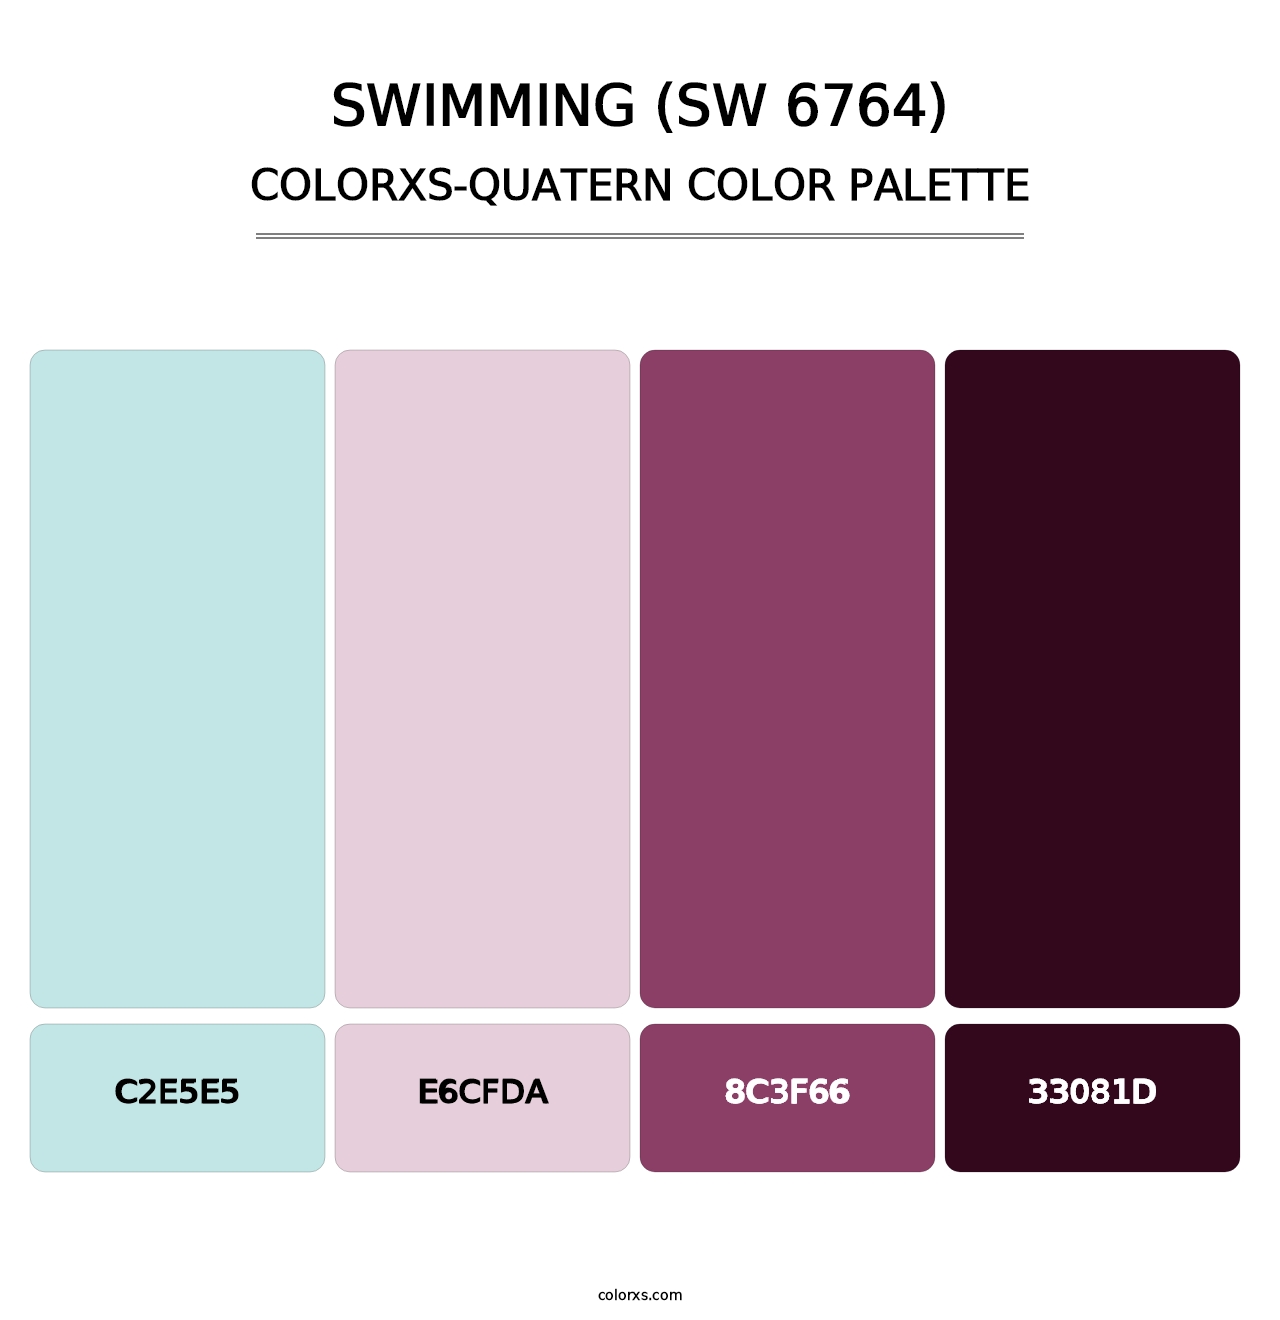 Swimming (SW 6764) - Colorxs Quatern Palette